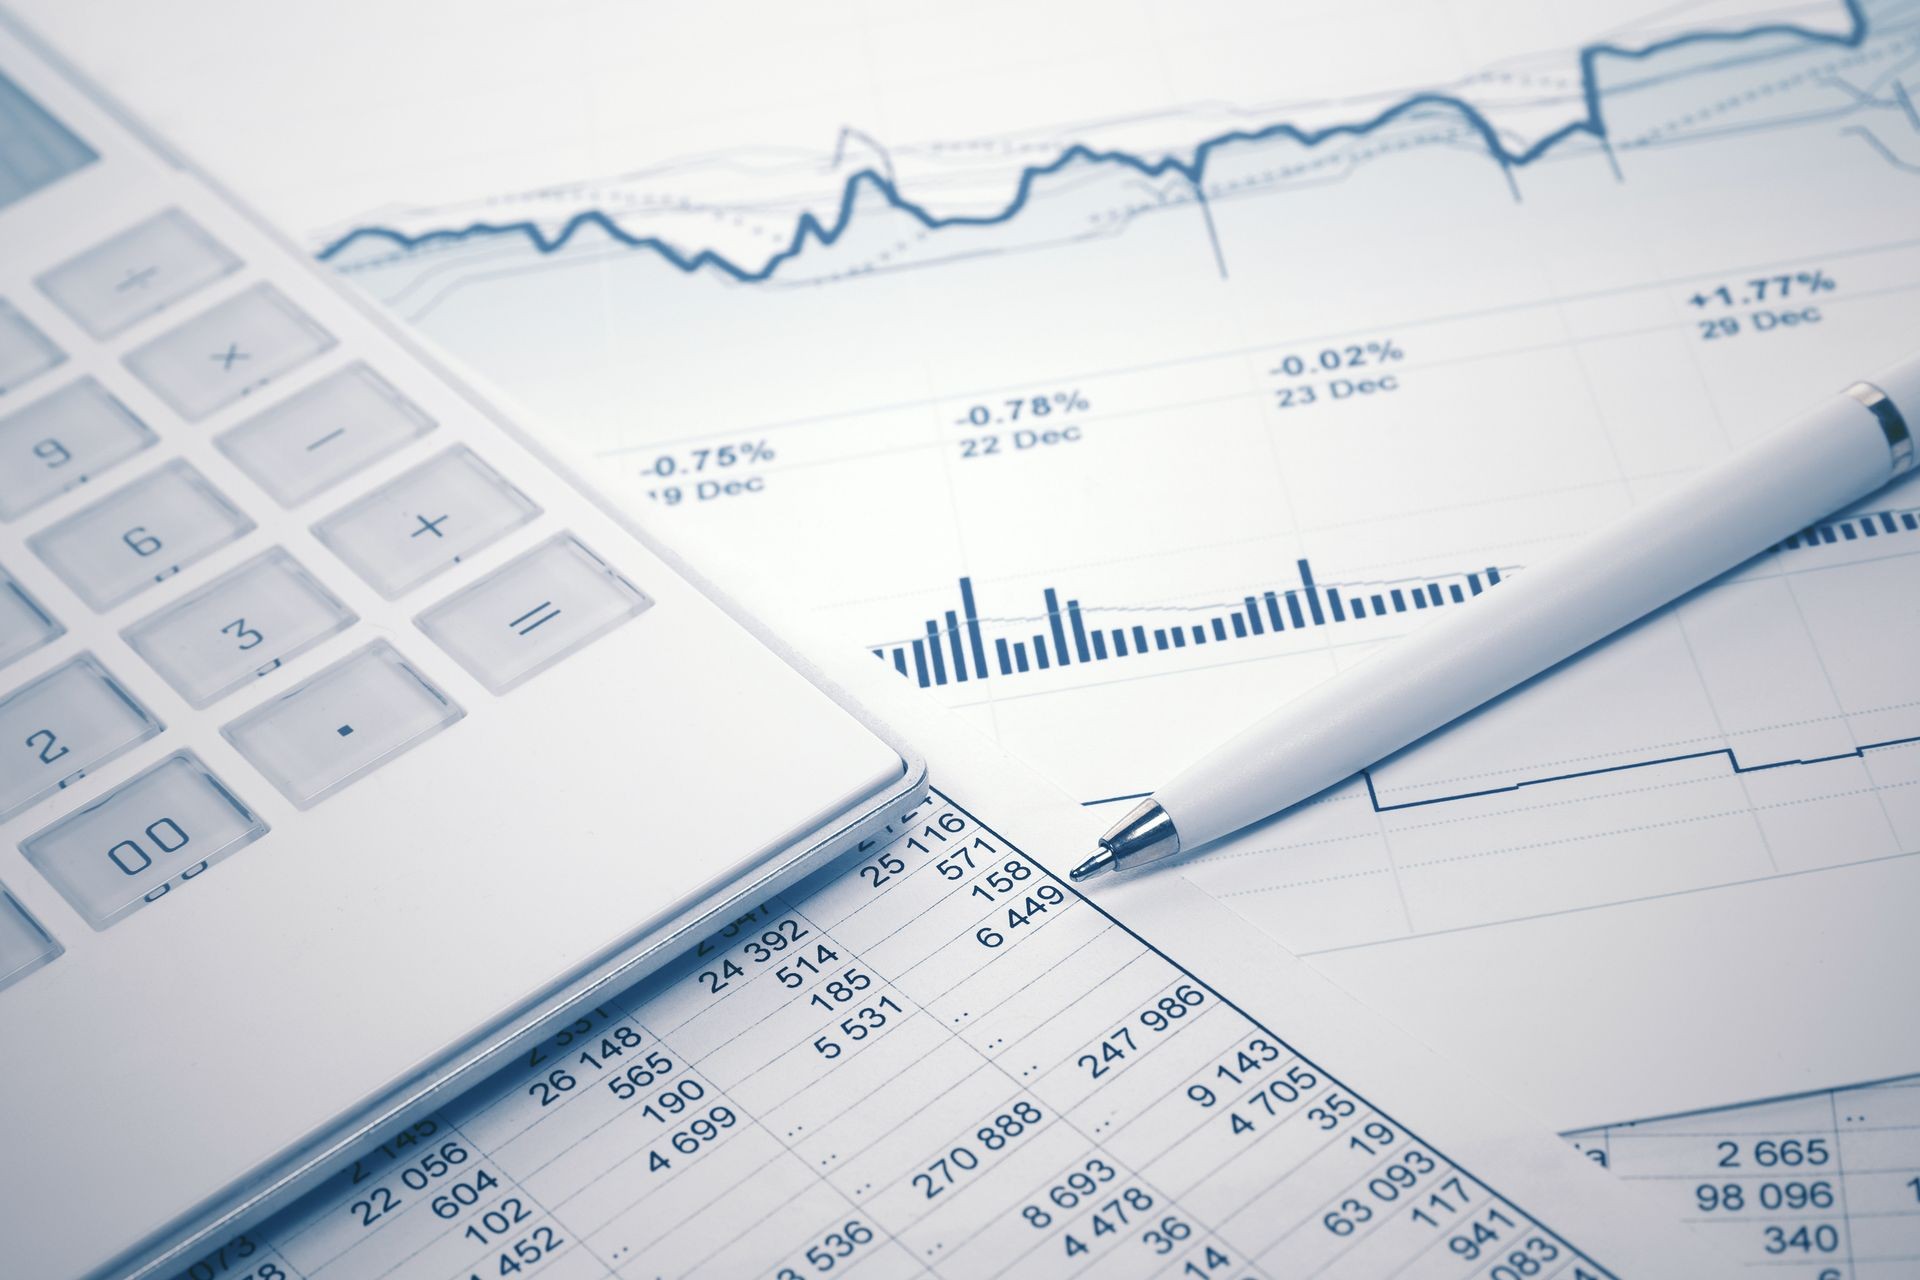 Financial accounting stock market graphs and charts analysis pen and calculator on balance sheets